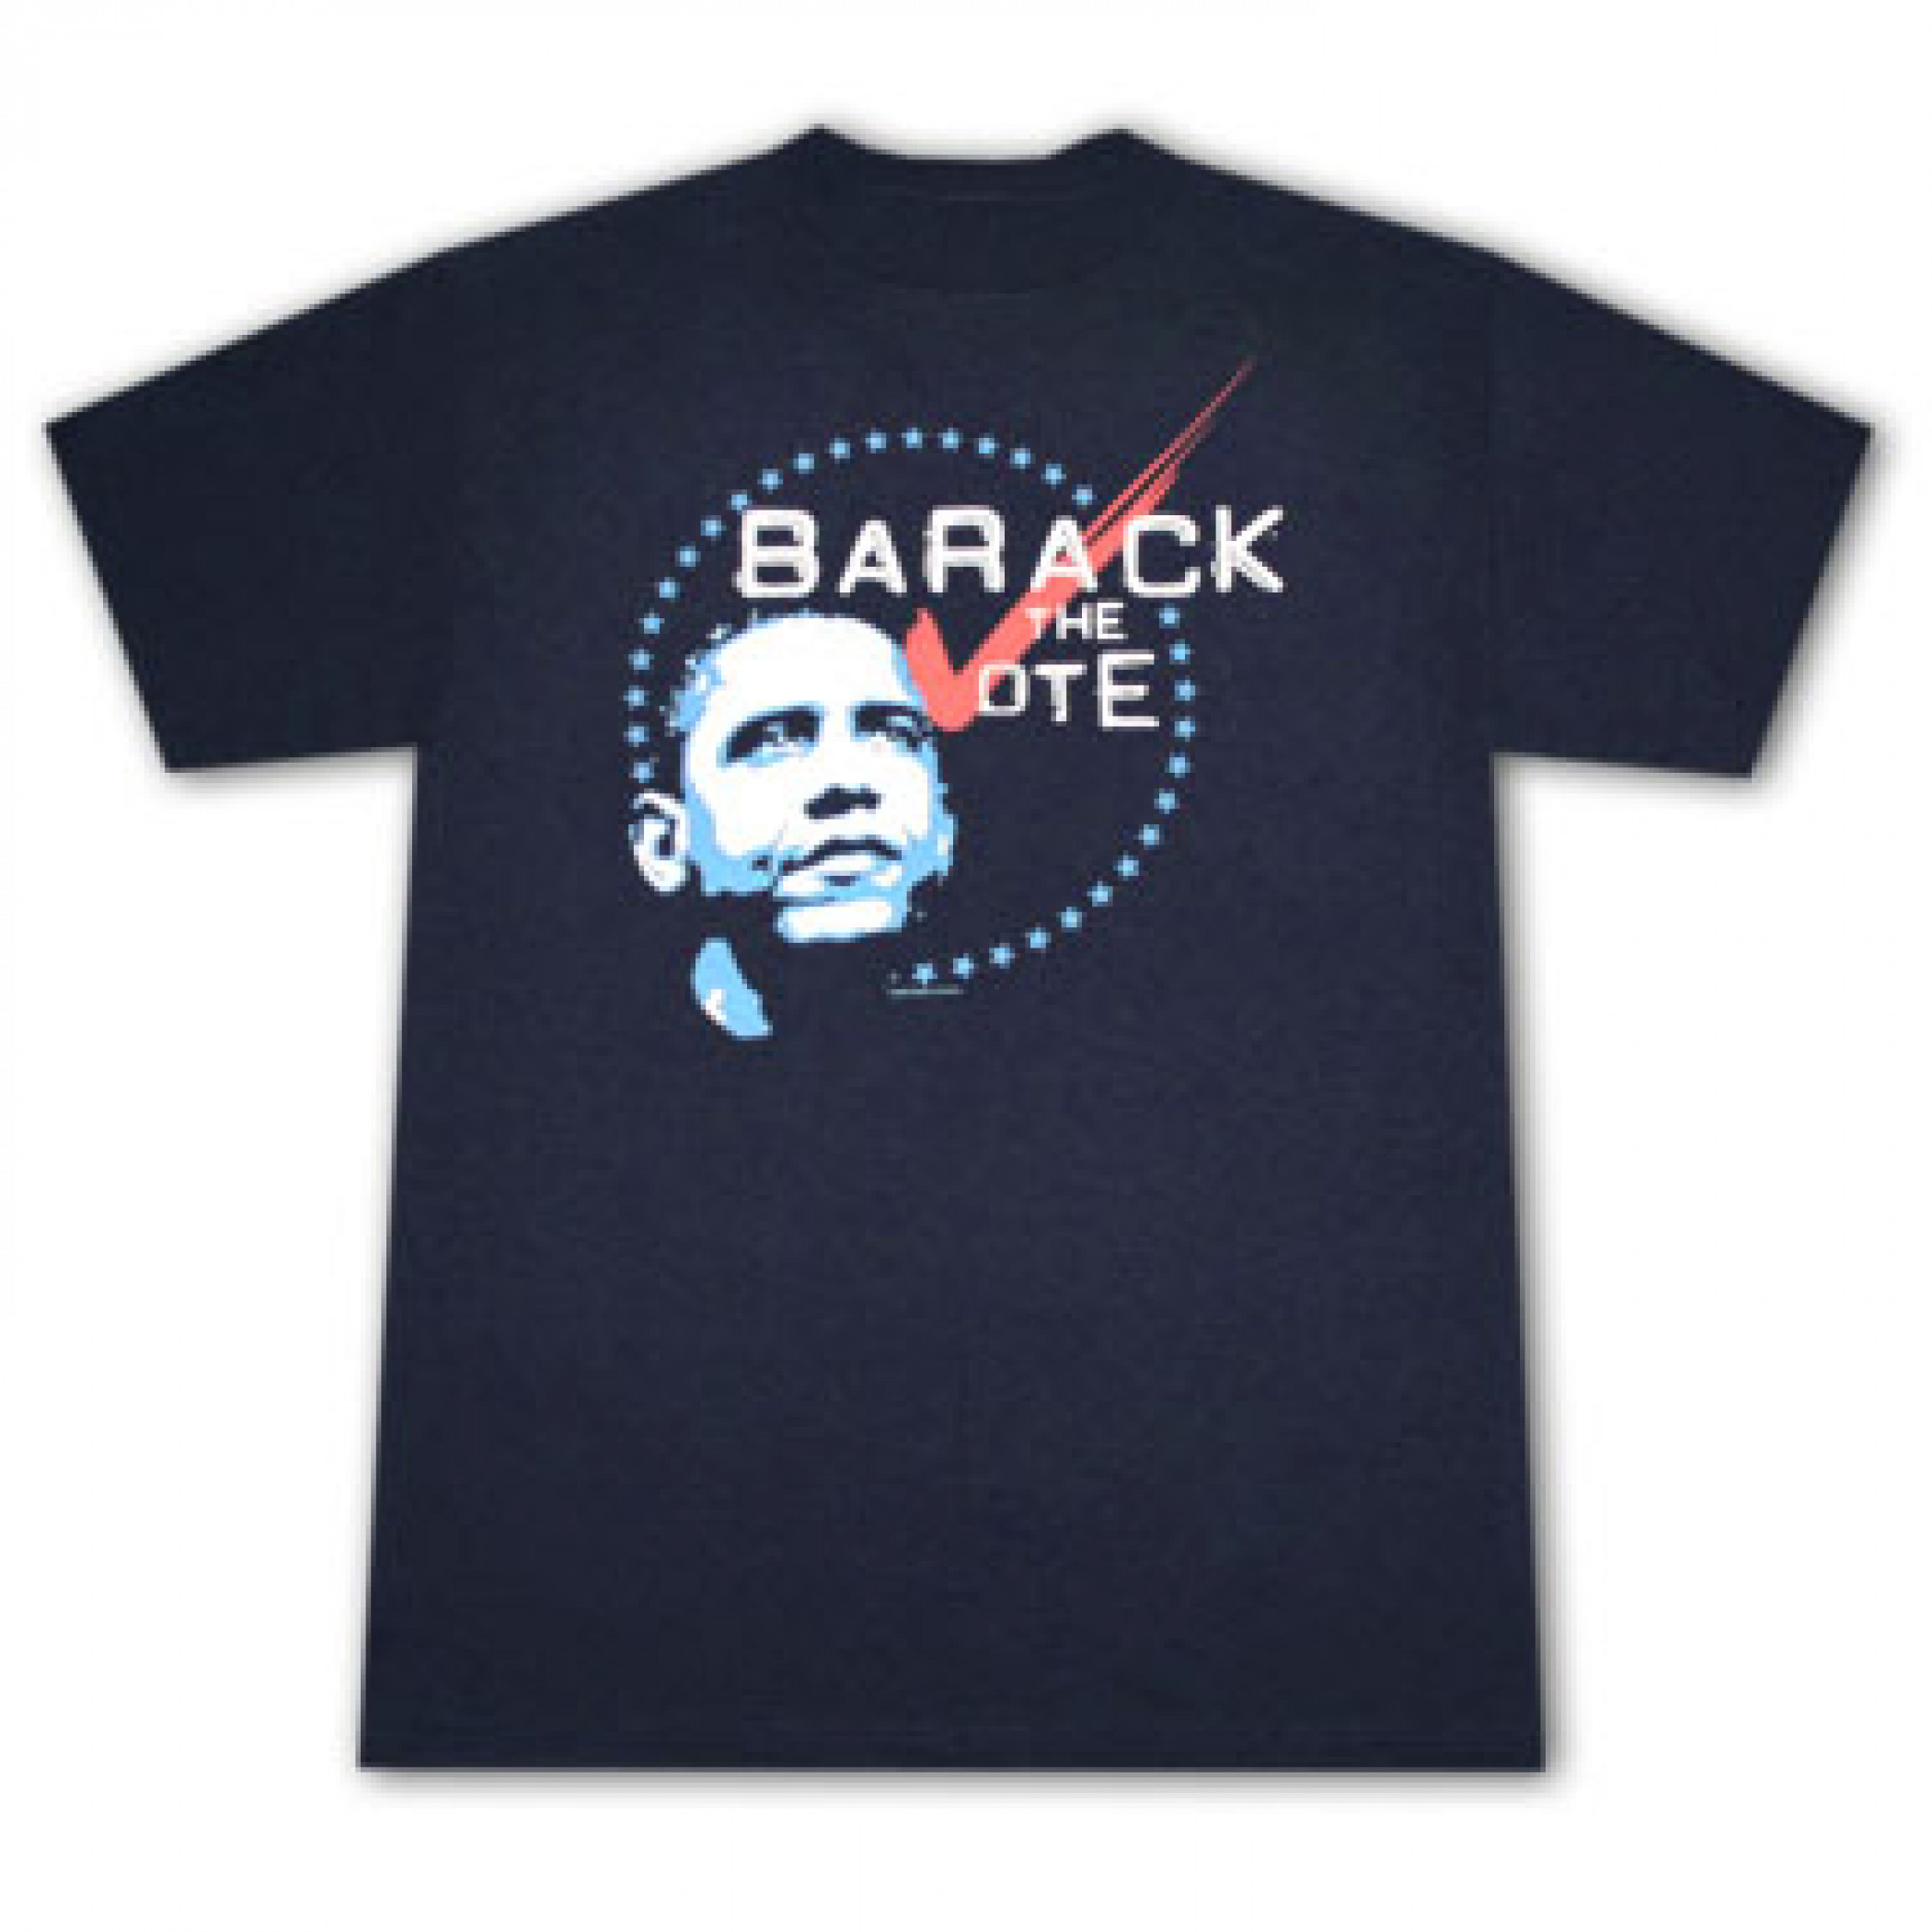 Obama Barack The Vote Political Navy Graphic TShirt